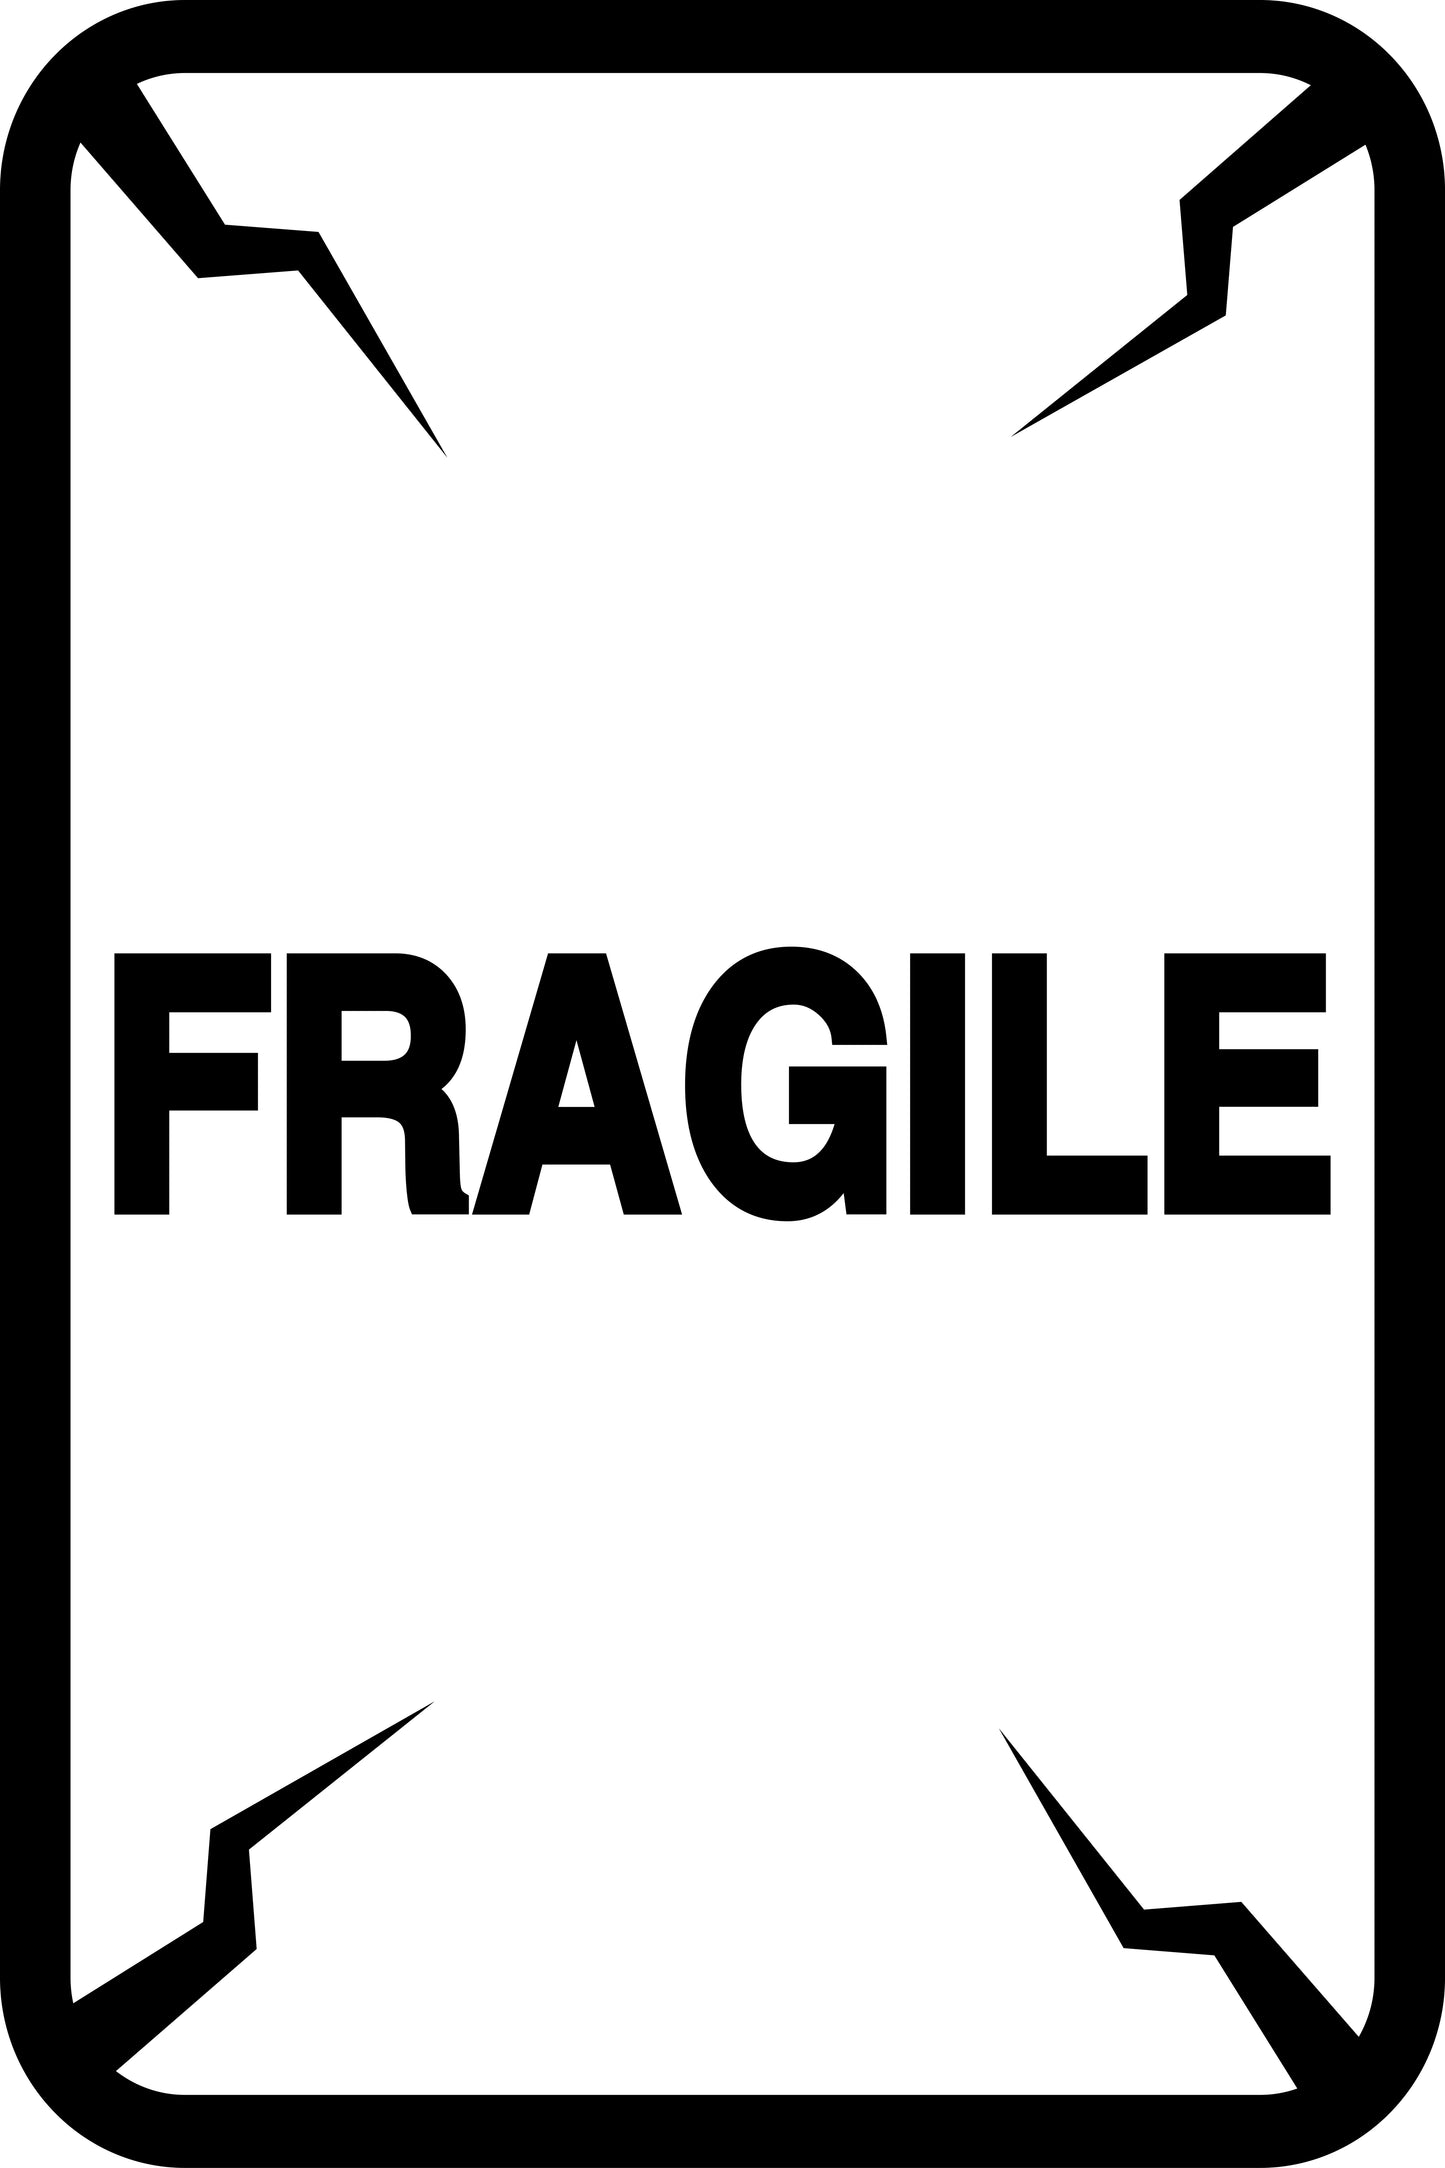 Fragile - Fragile sticker "Fragile " LH-FRAGILE-V-10400-88-0